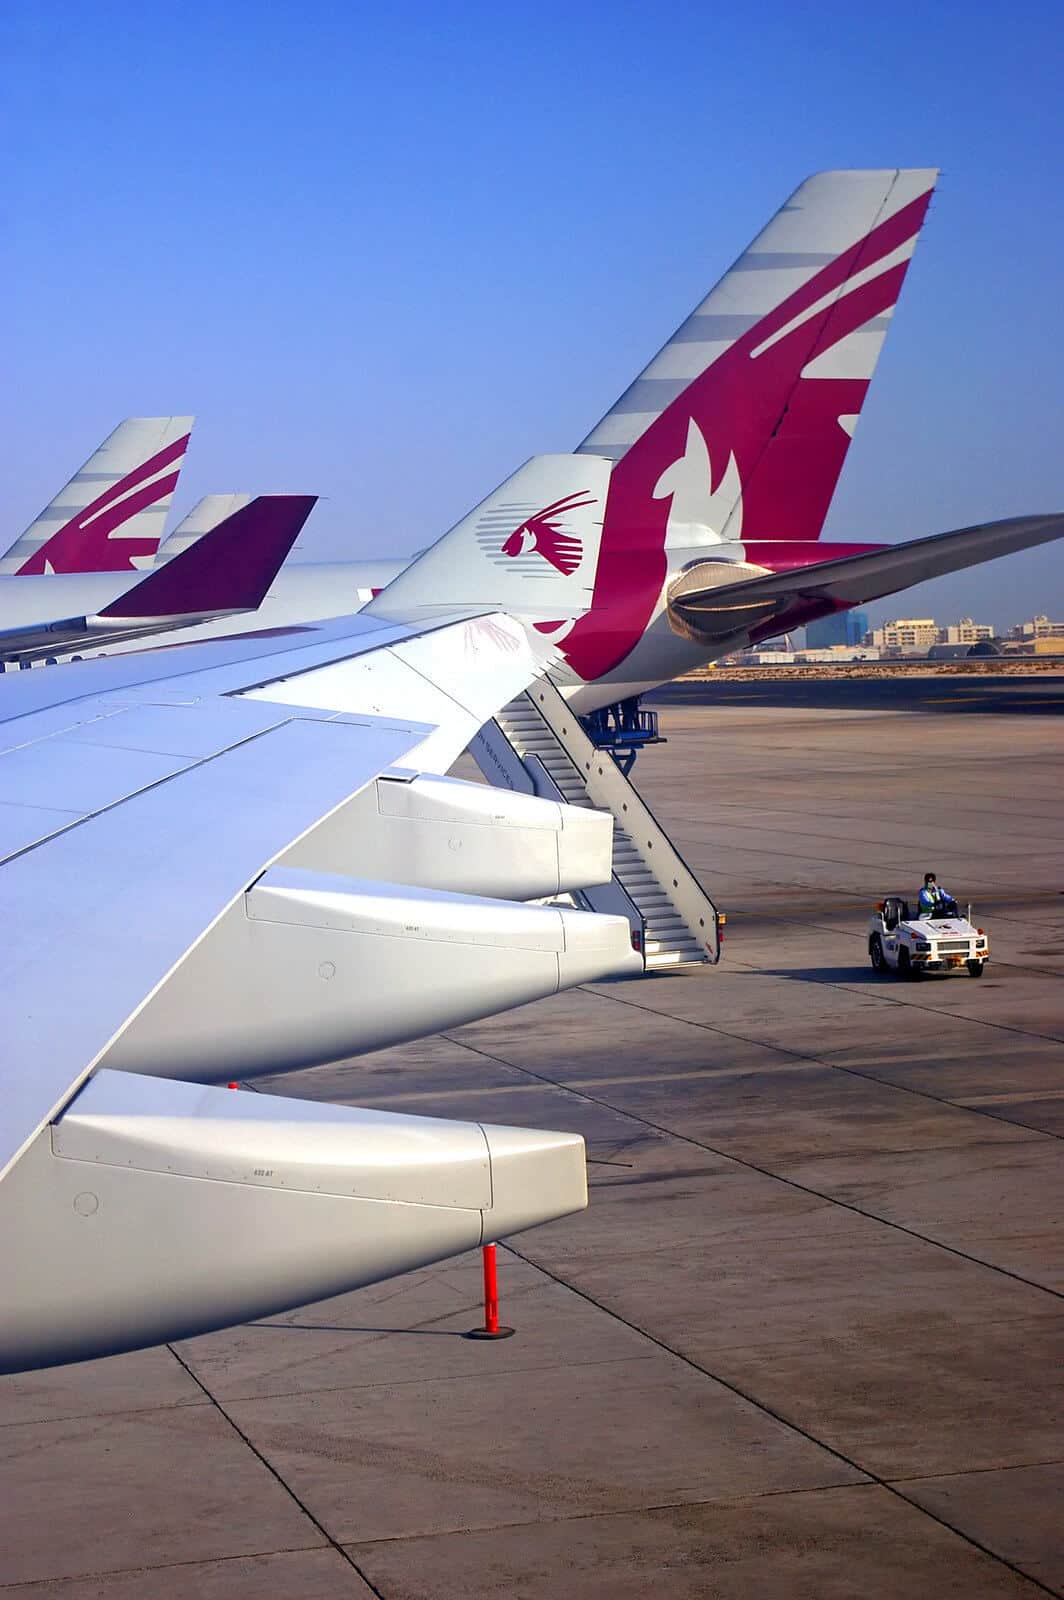 Does Qatar Airways serve alcohol? 